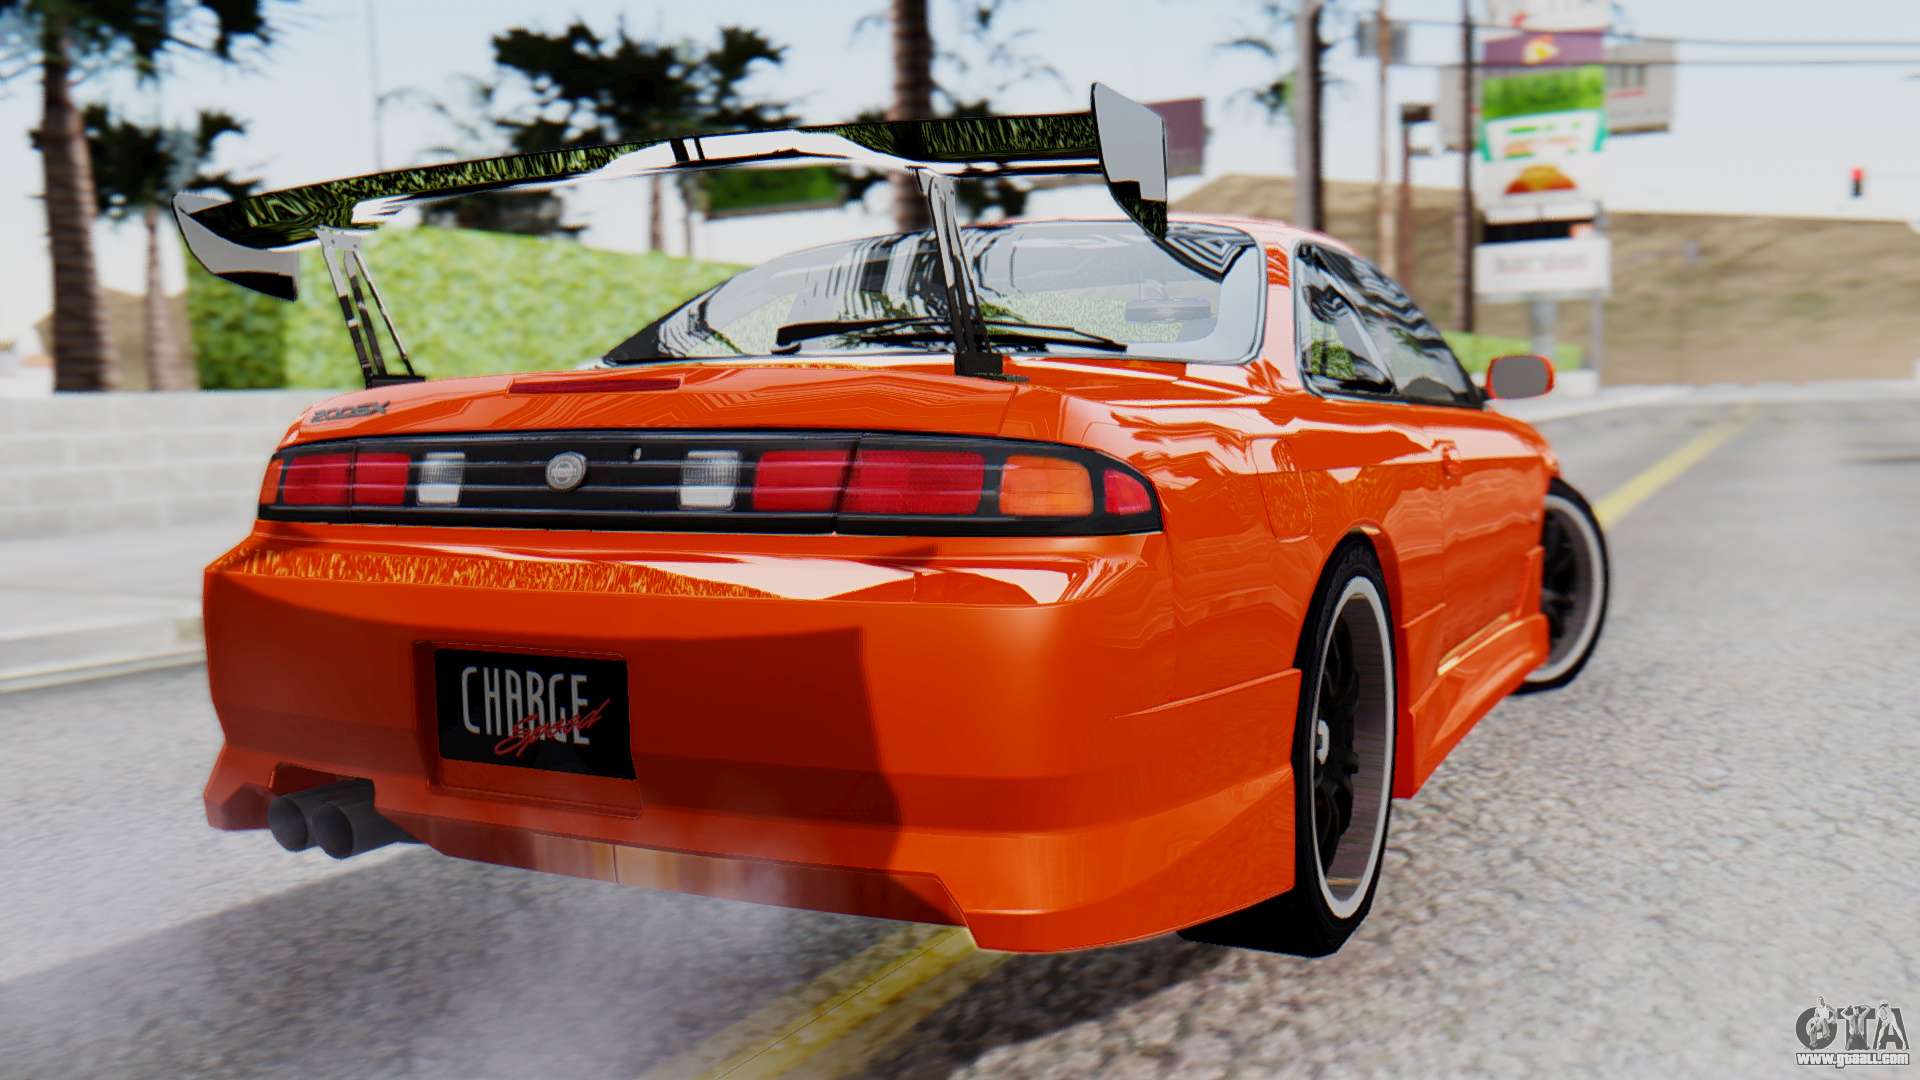 Cool Parkour Mod for GTA San Andreas - gamemoddingnet